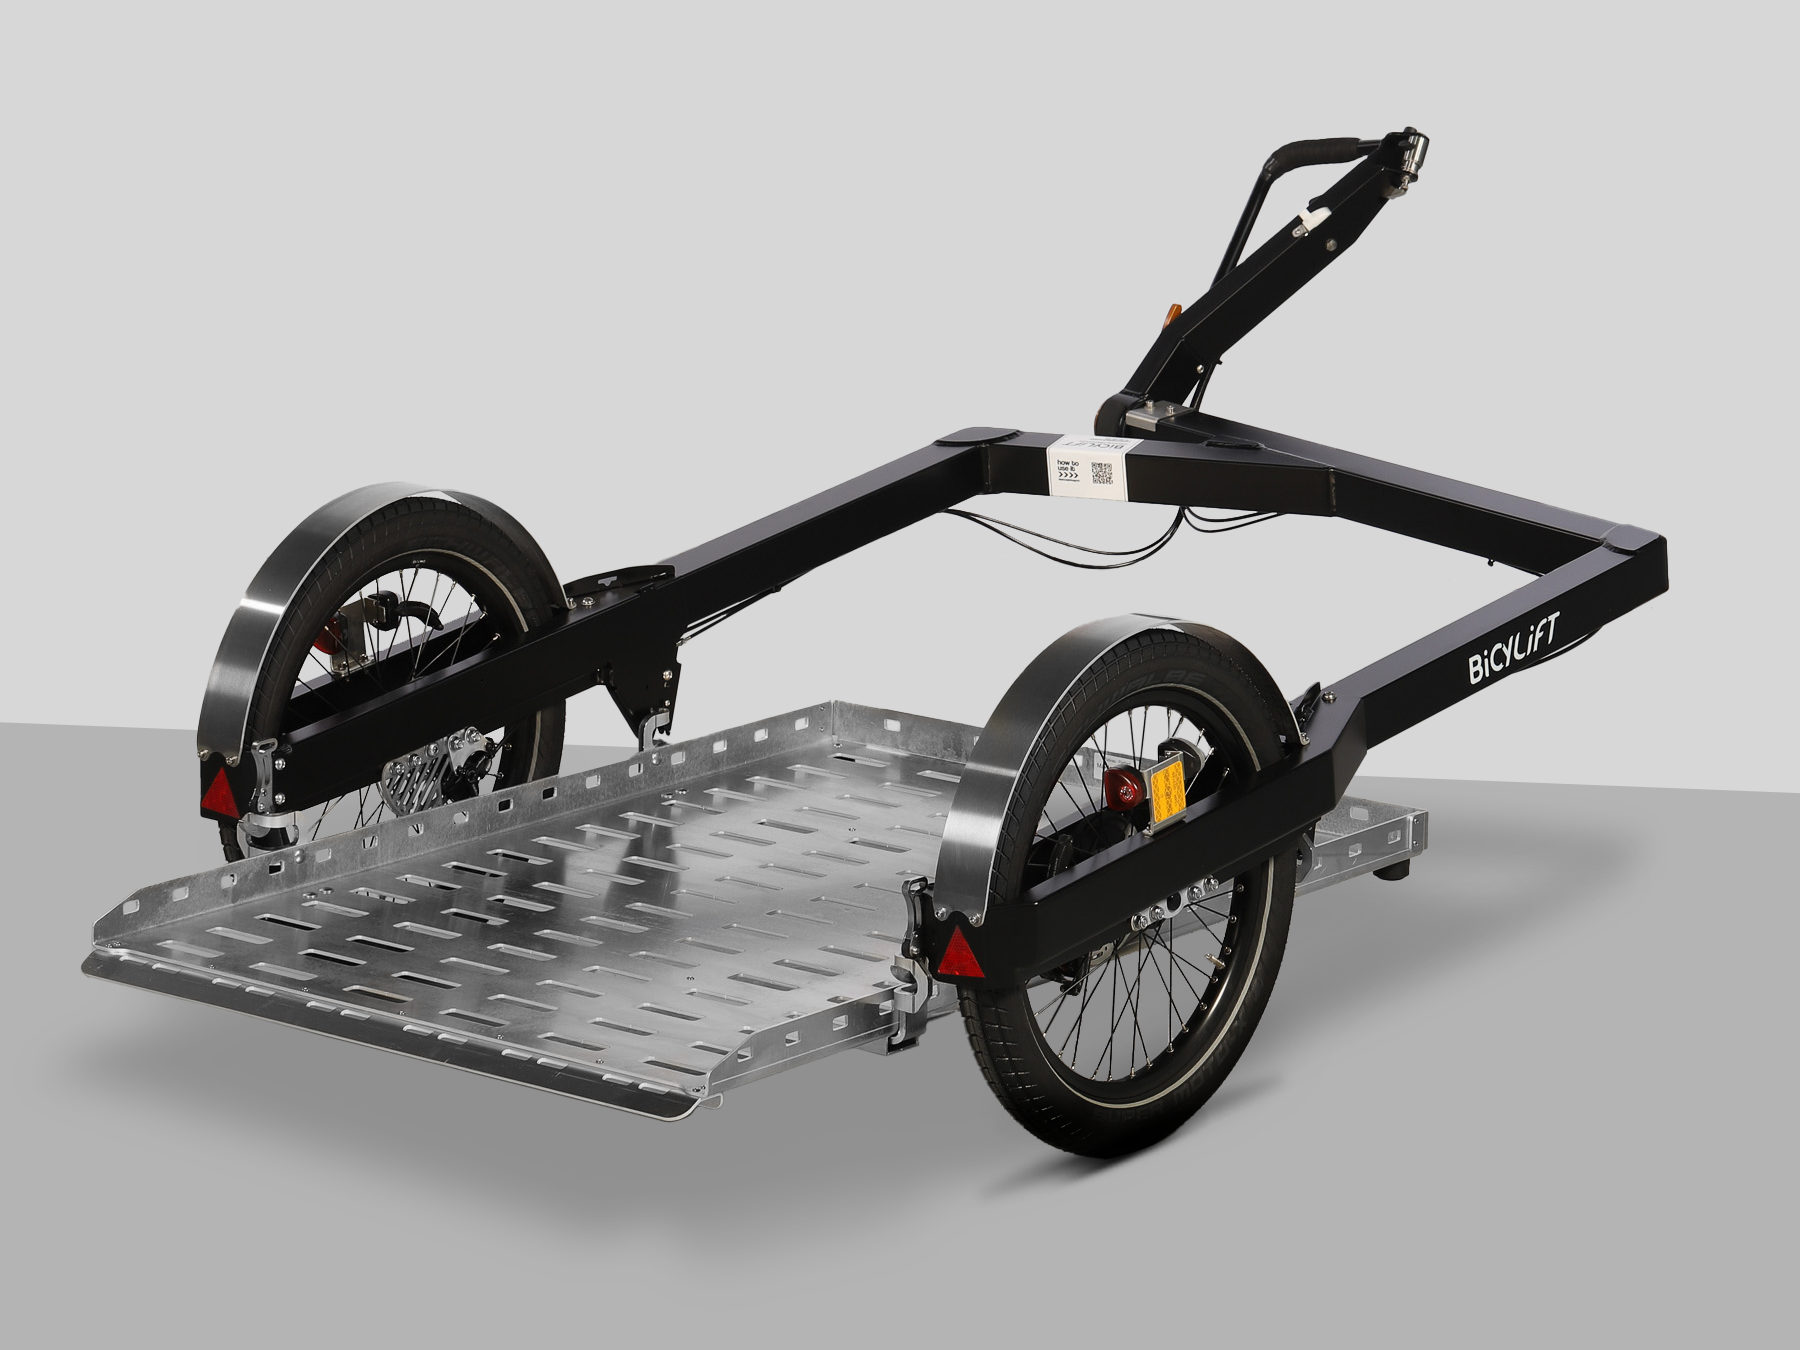 Remorque Bicylift - Présentation de la remorque Fleximodal